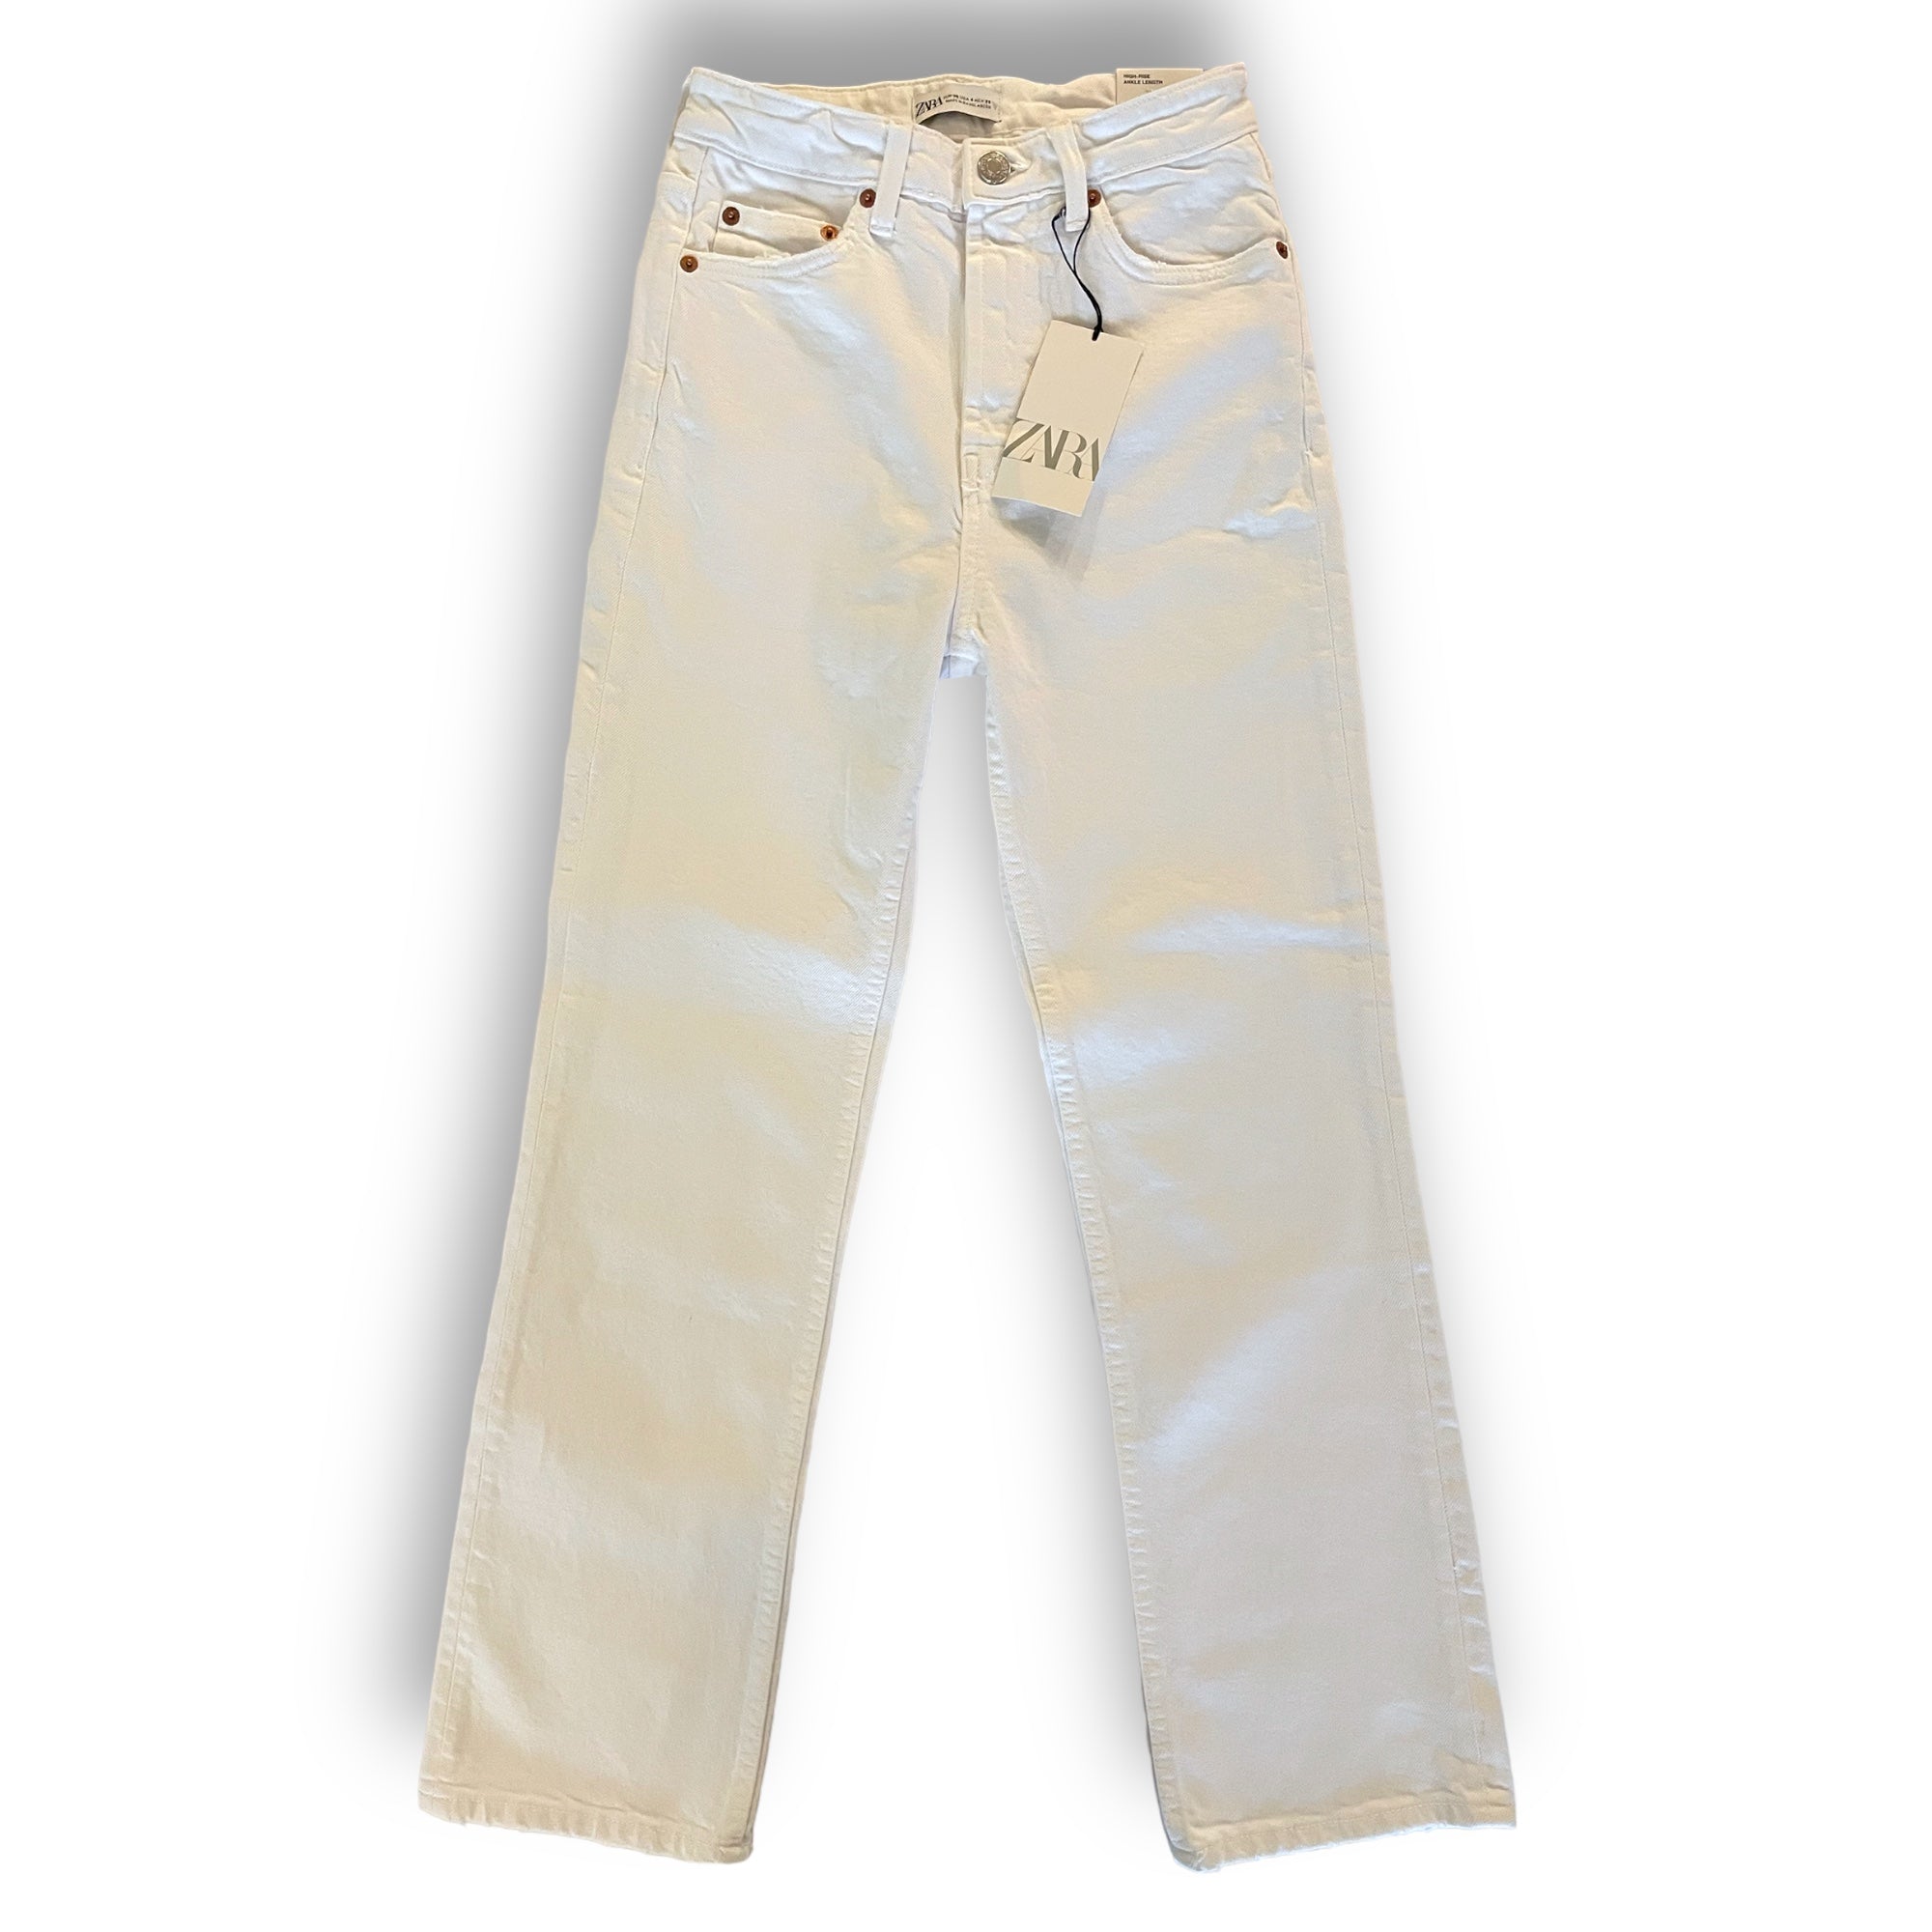 Styring ambulance Monarch ZARA High-Rise STOVE PIPE White Denim Jeans |Size: EU 34 US 4